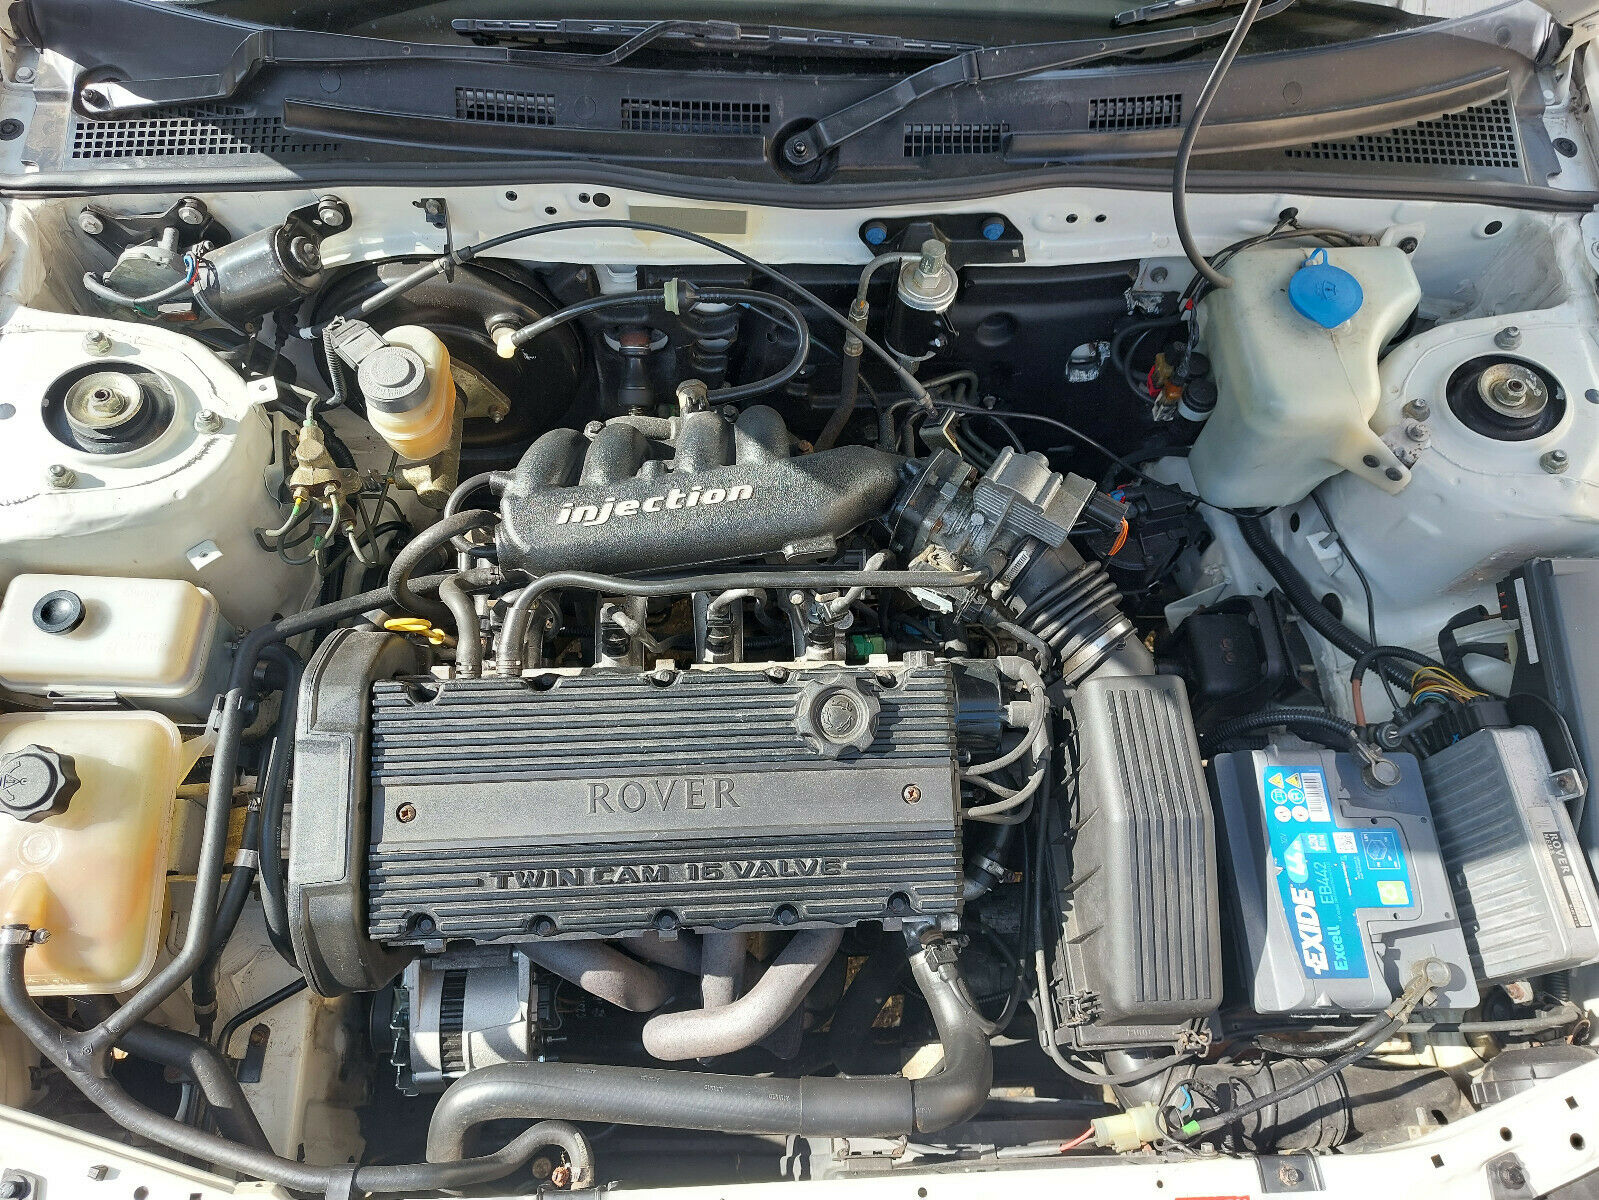 1993 Rover 214 K-series engine